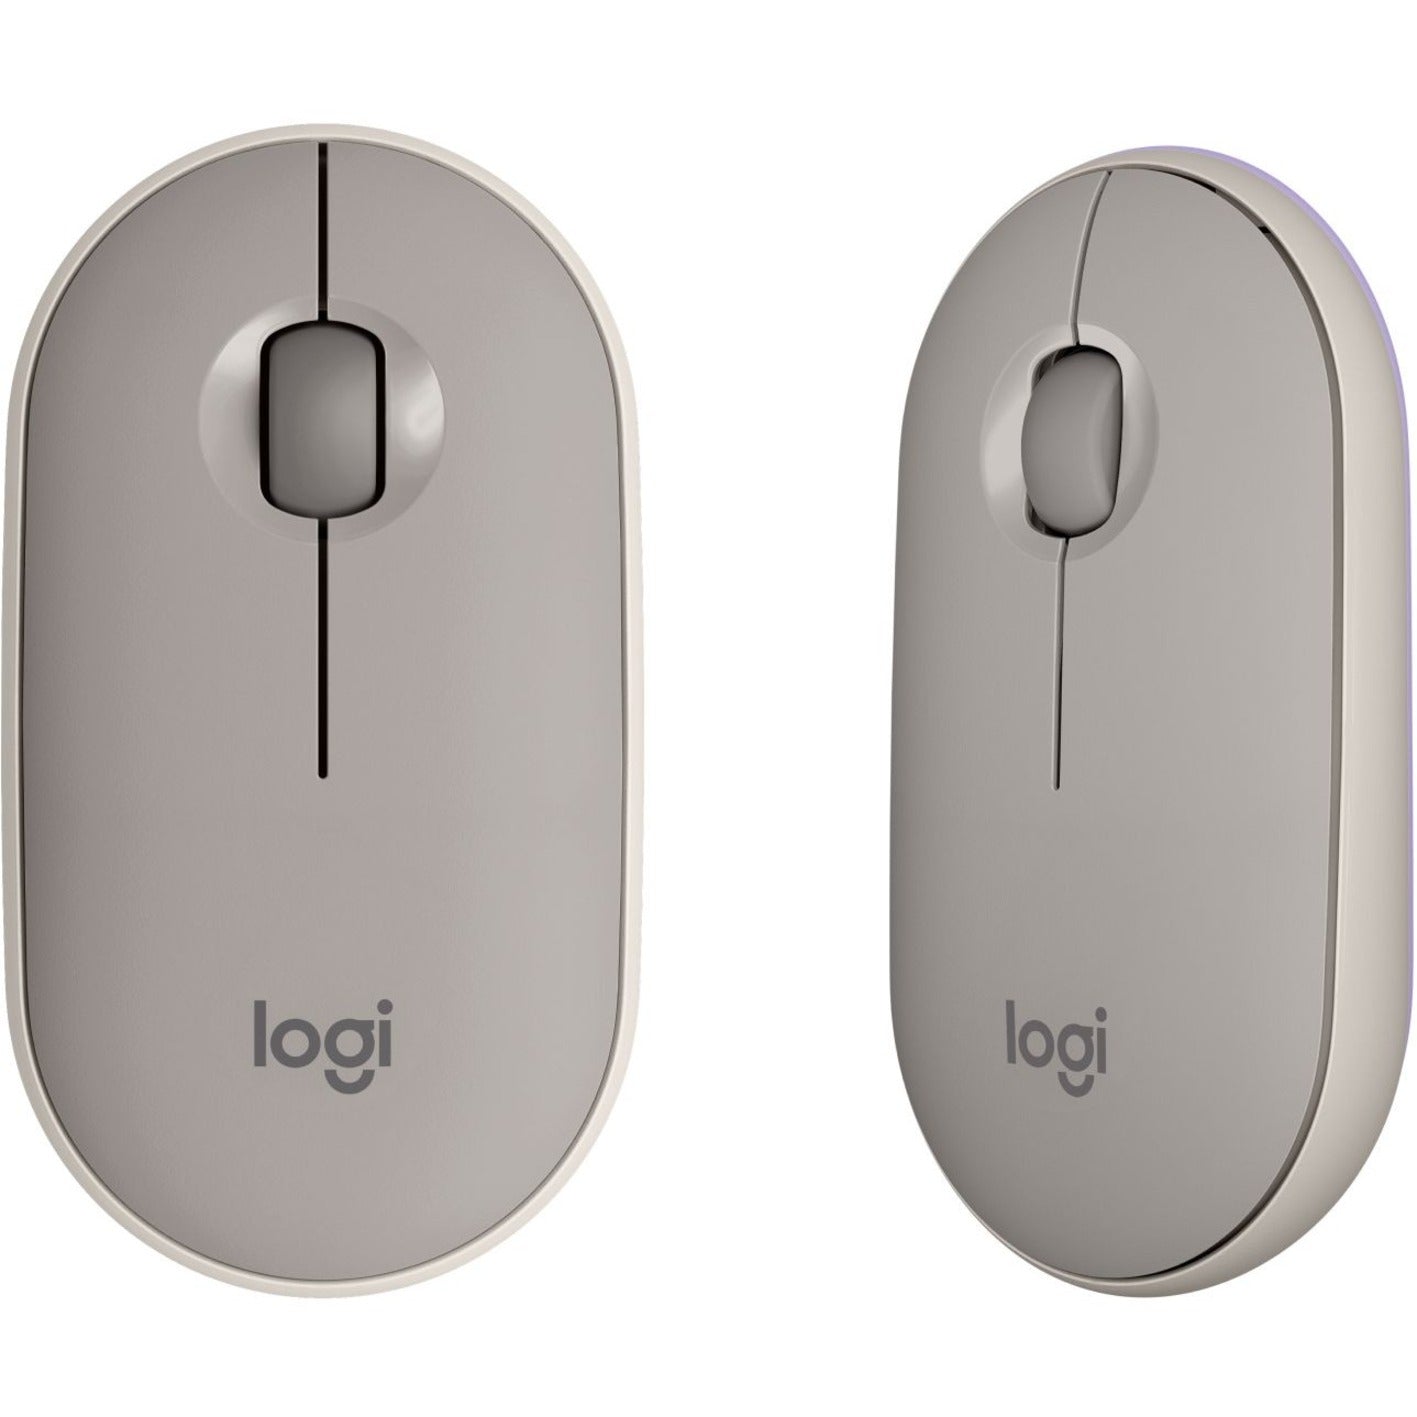 Logitech 910-006658 Pebble M350 Wireless Mouse, Sand, 2.4 GHz, 1000 dpi [Discontinued]